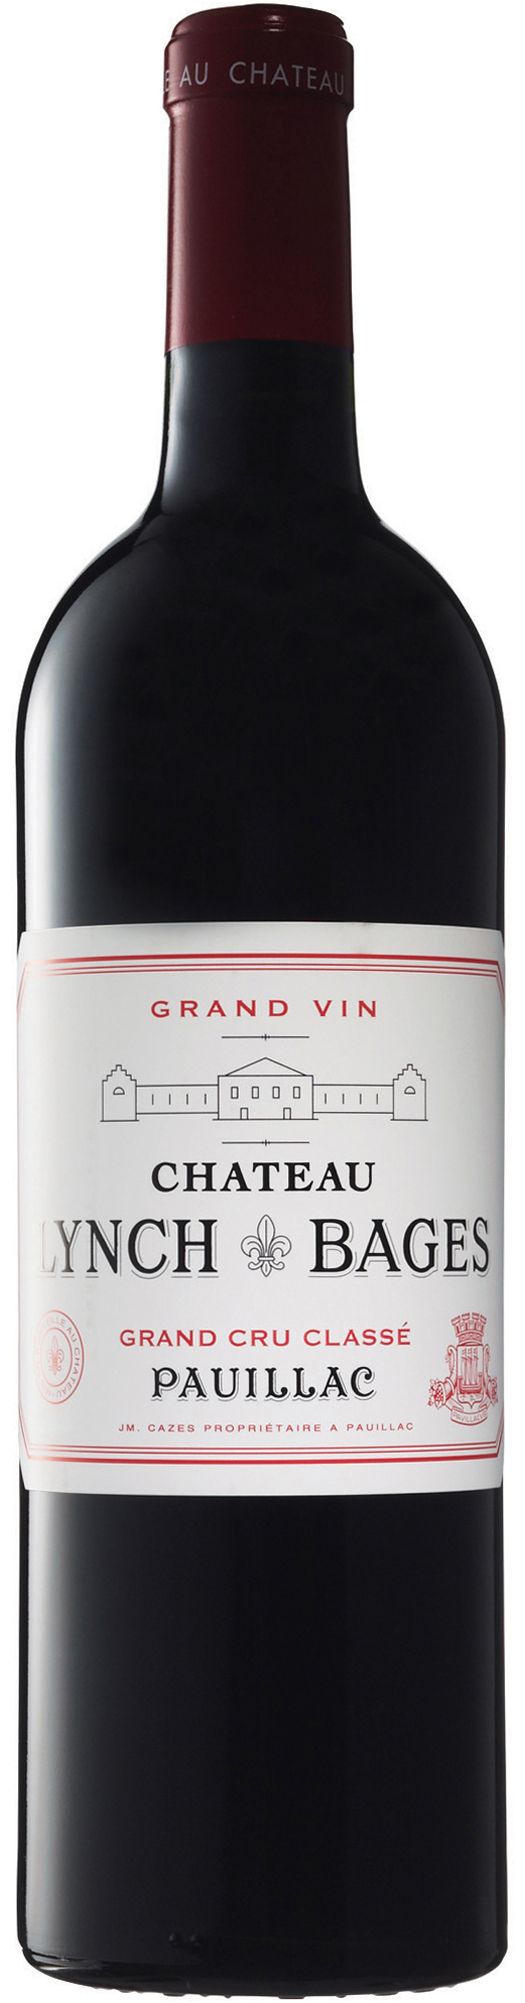 Chateau Lynch-Bages, Grand Cru Classe, 2014